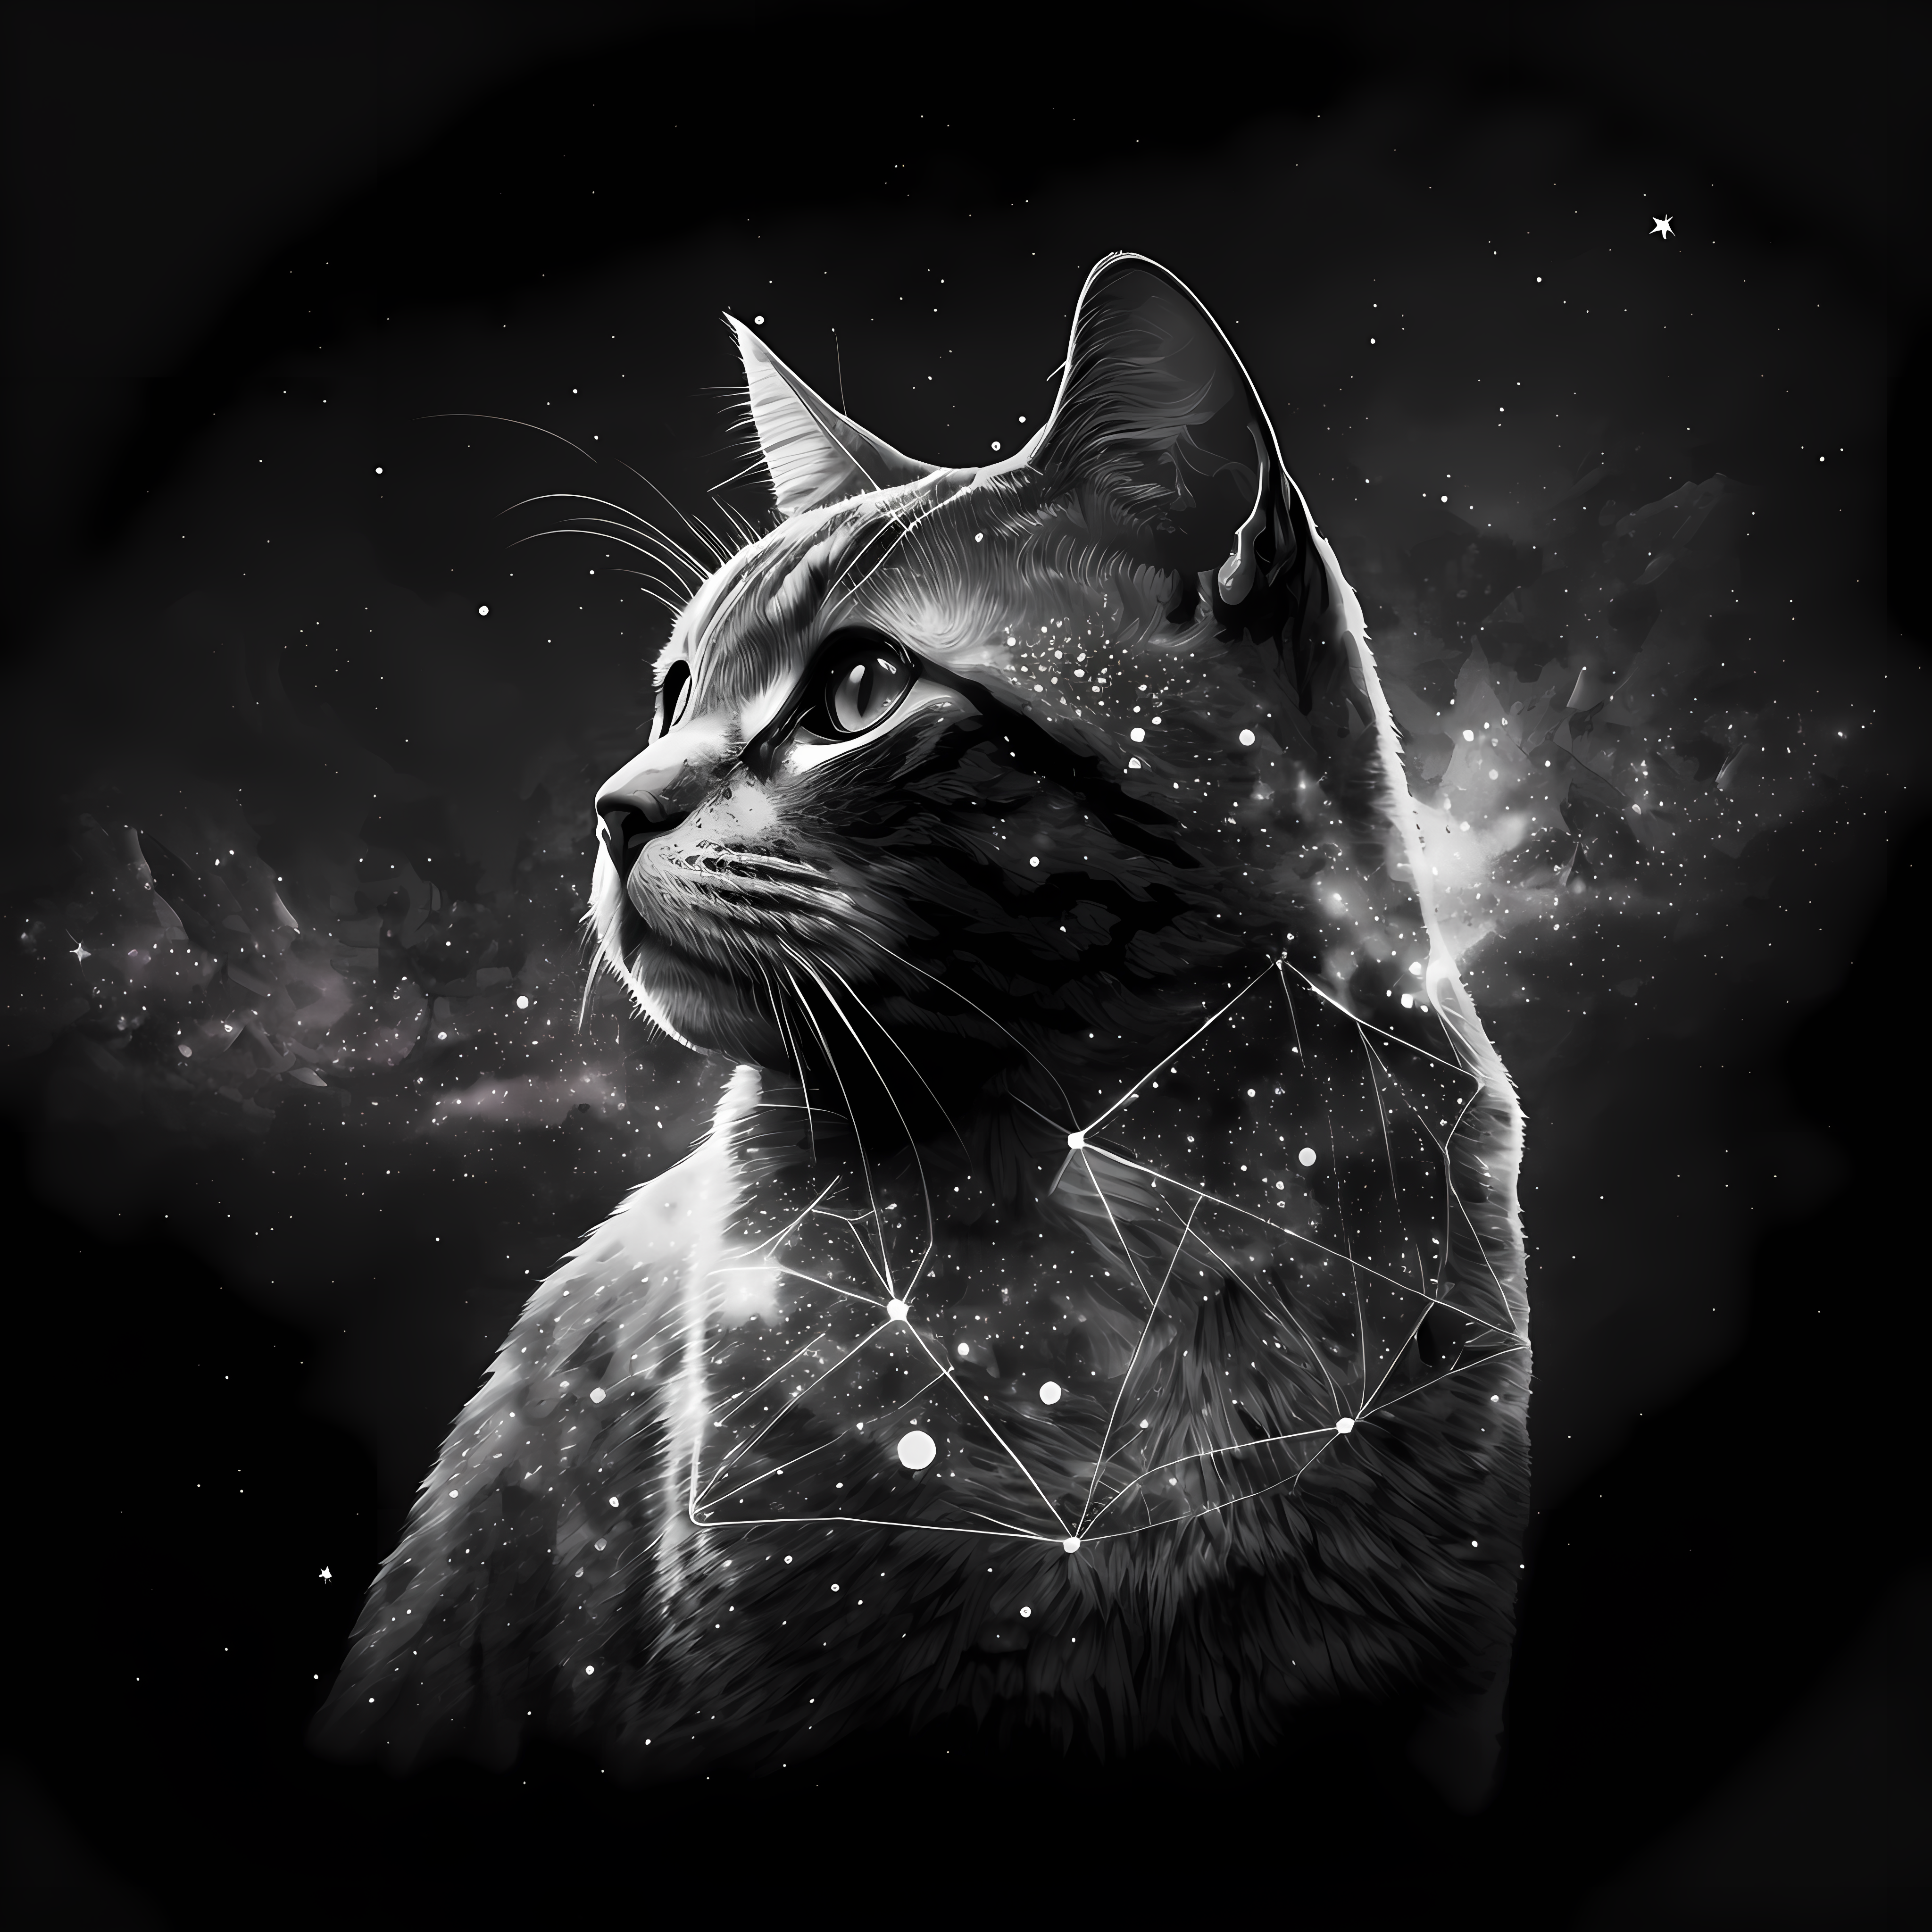 General 4096x4096 magic AI art monochrome constellations cats